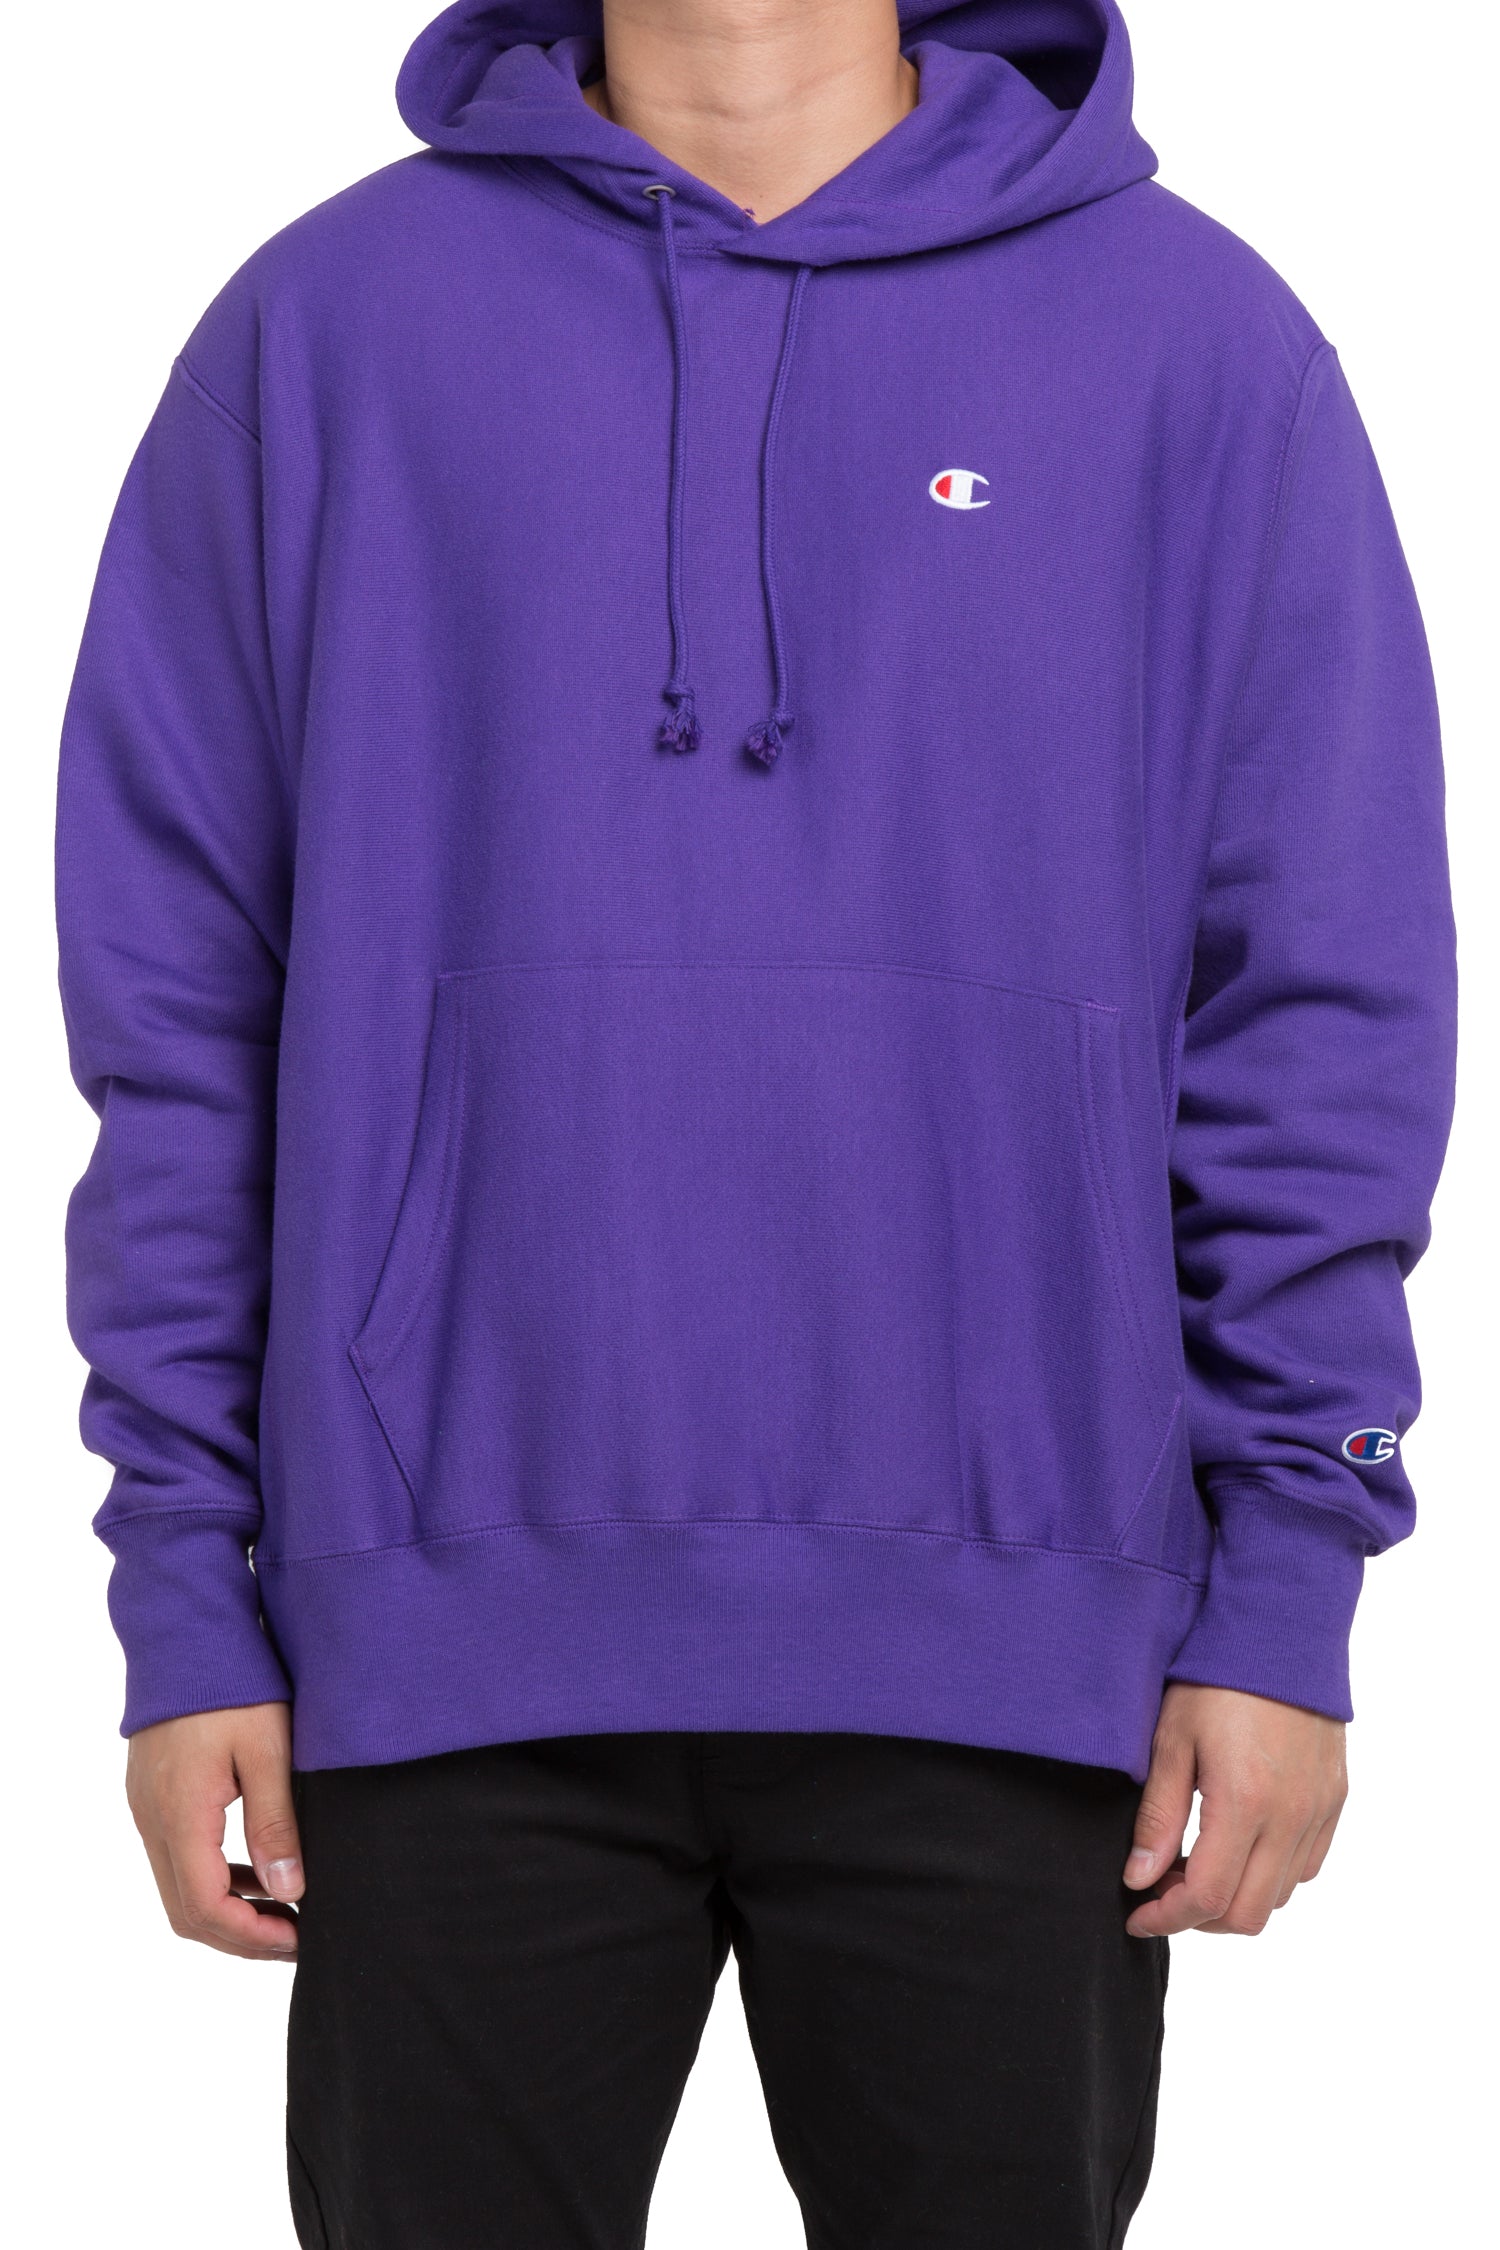 lavender purple champion hoodie